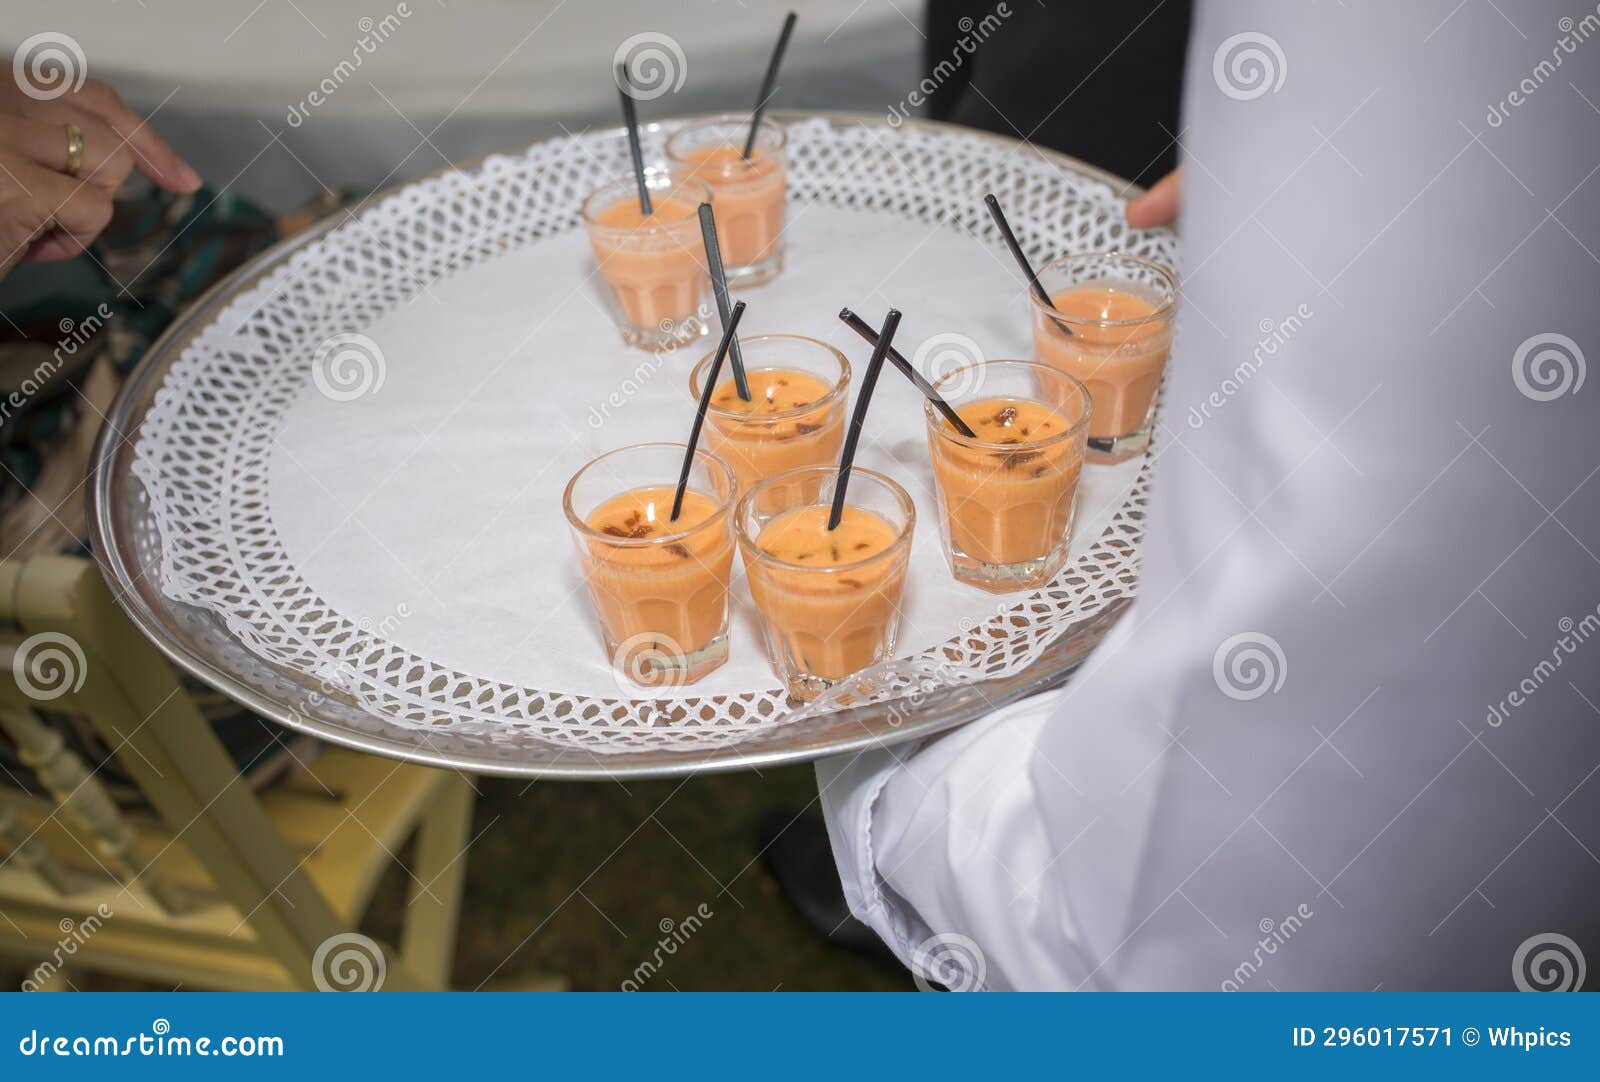 waiter offering gazpacho and salmorejo shots